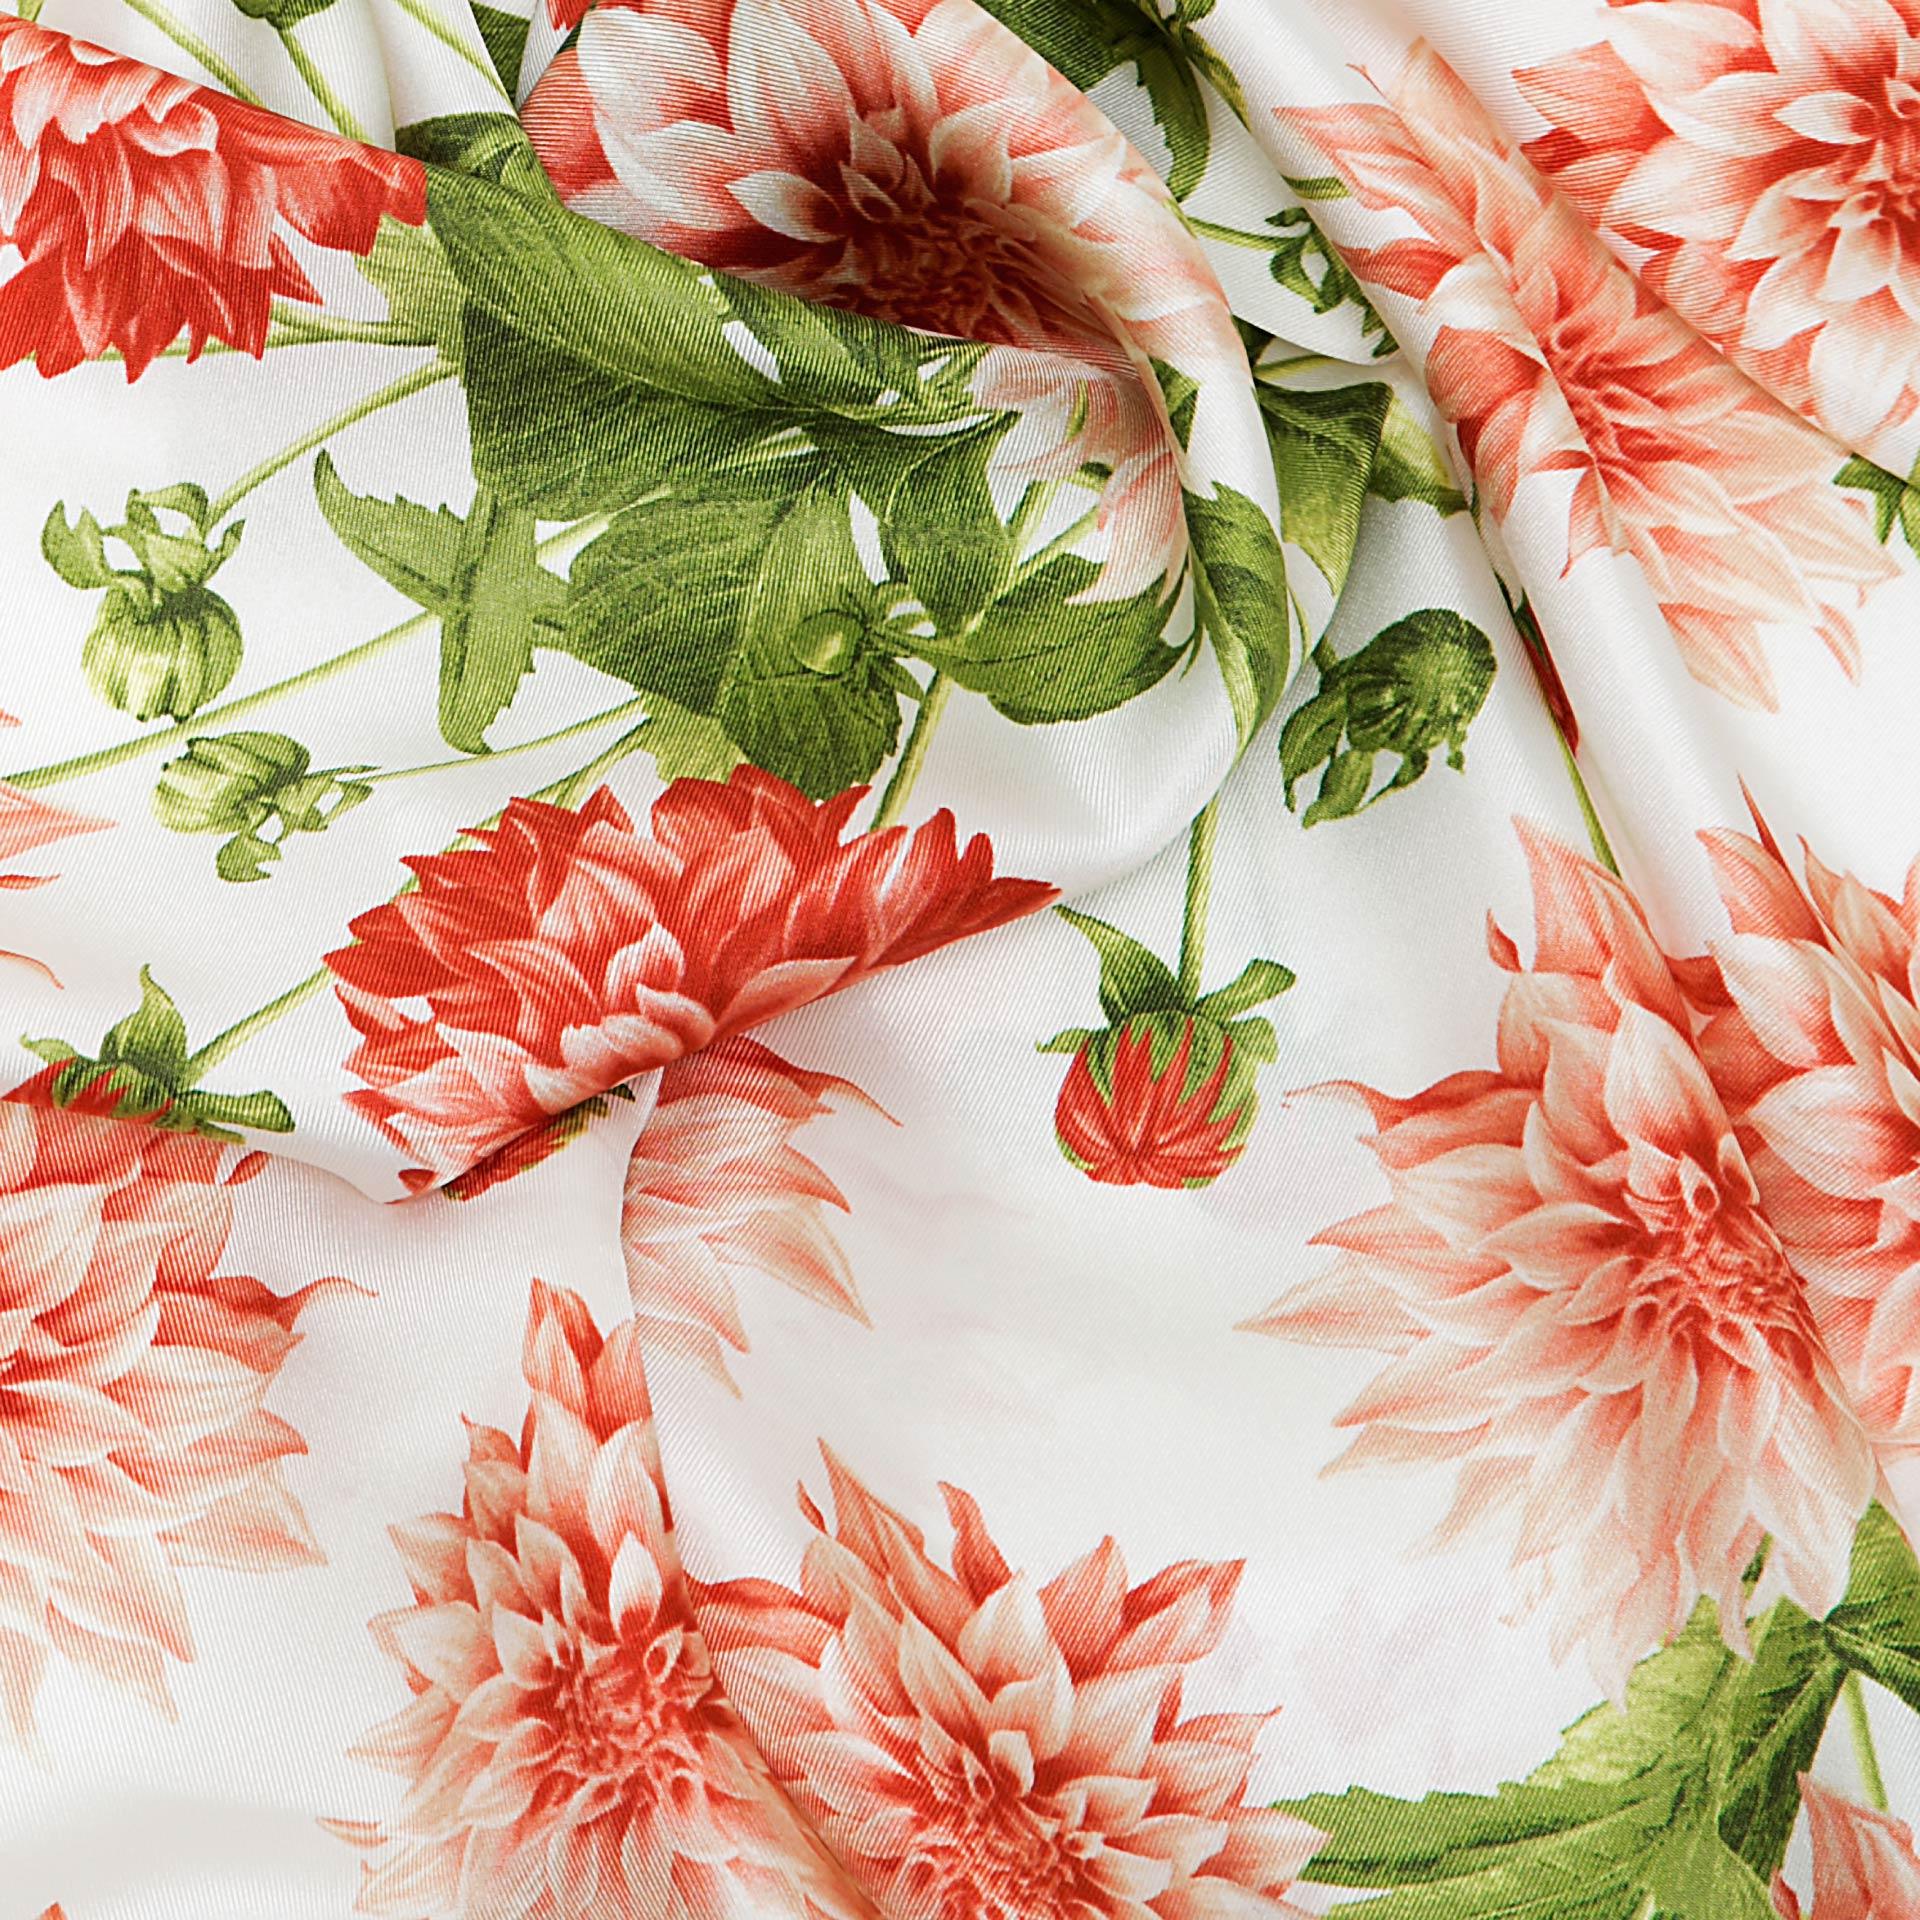 Coral Pink Dahlia Garden Silk Scarf - Harmonising London's design with Italian craftsmanship, a splendid gift choice.